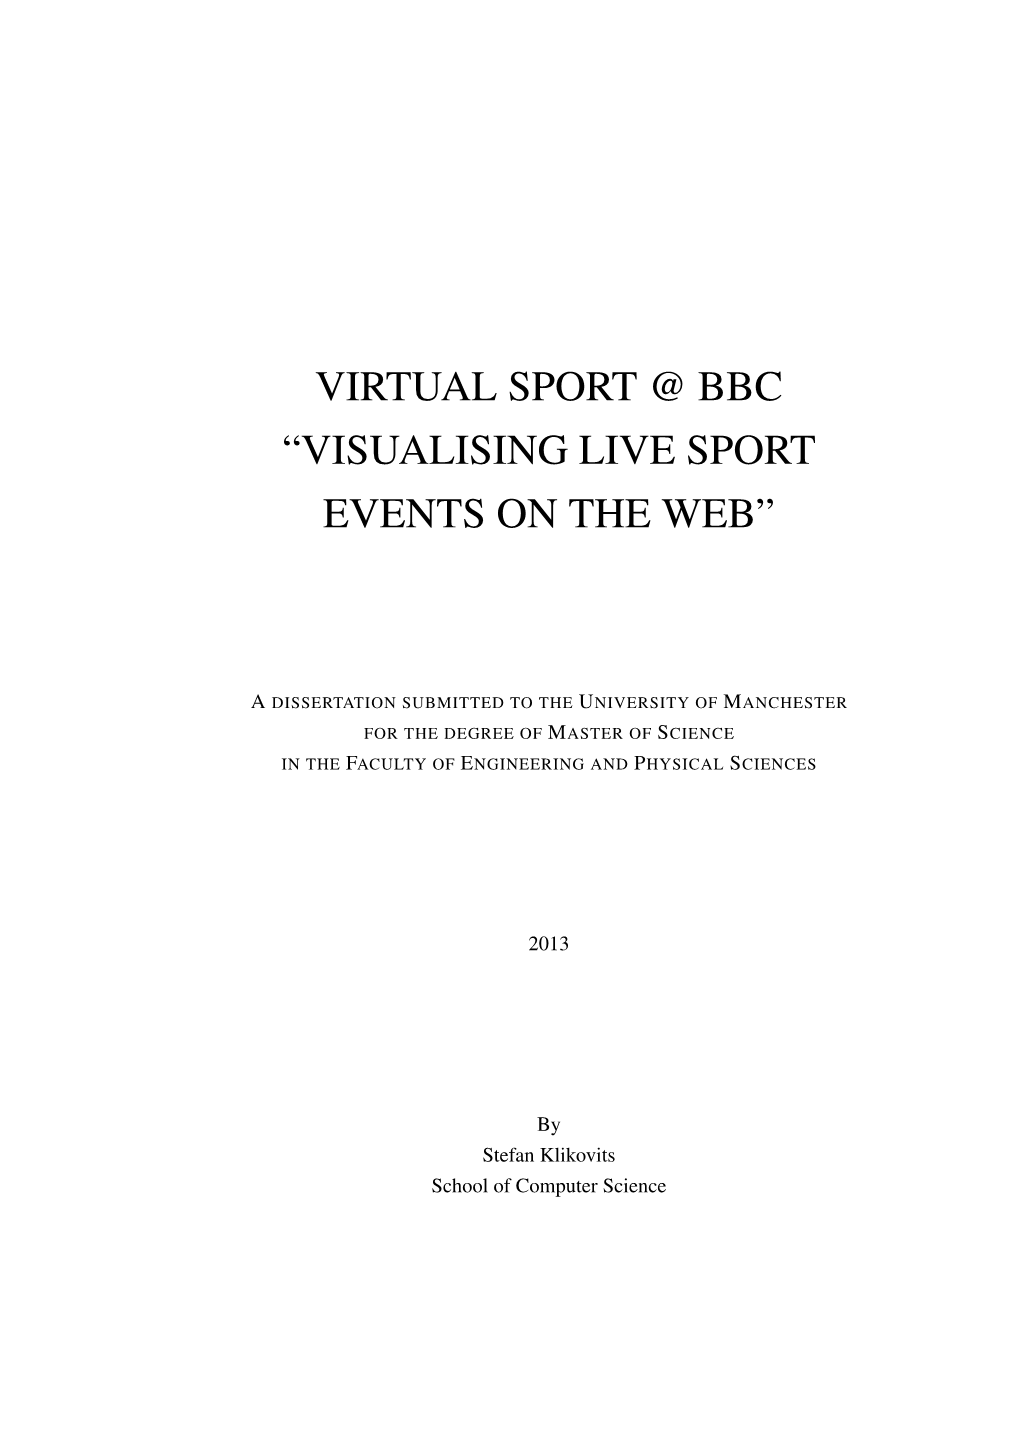 Virtual Sport @ Bbc “Visualising Live Sport Events on the Web”